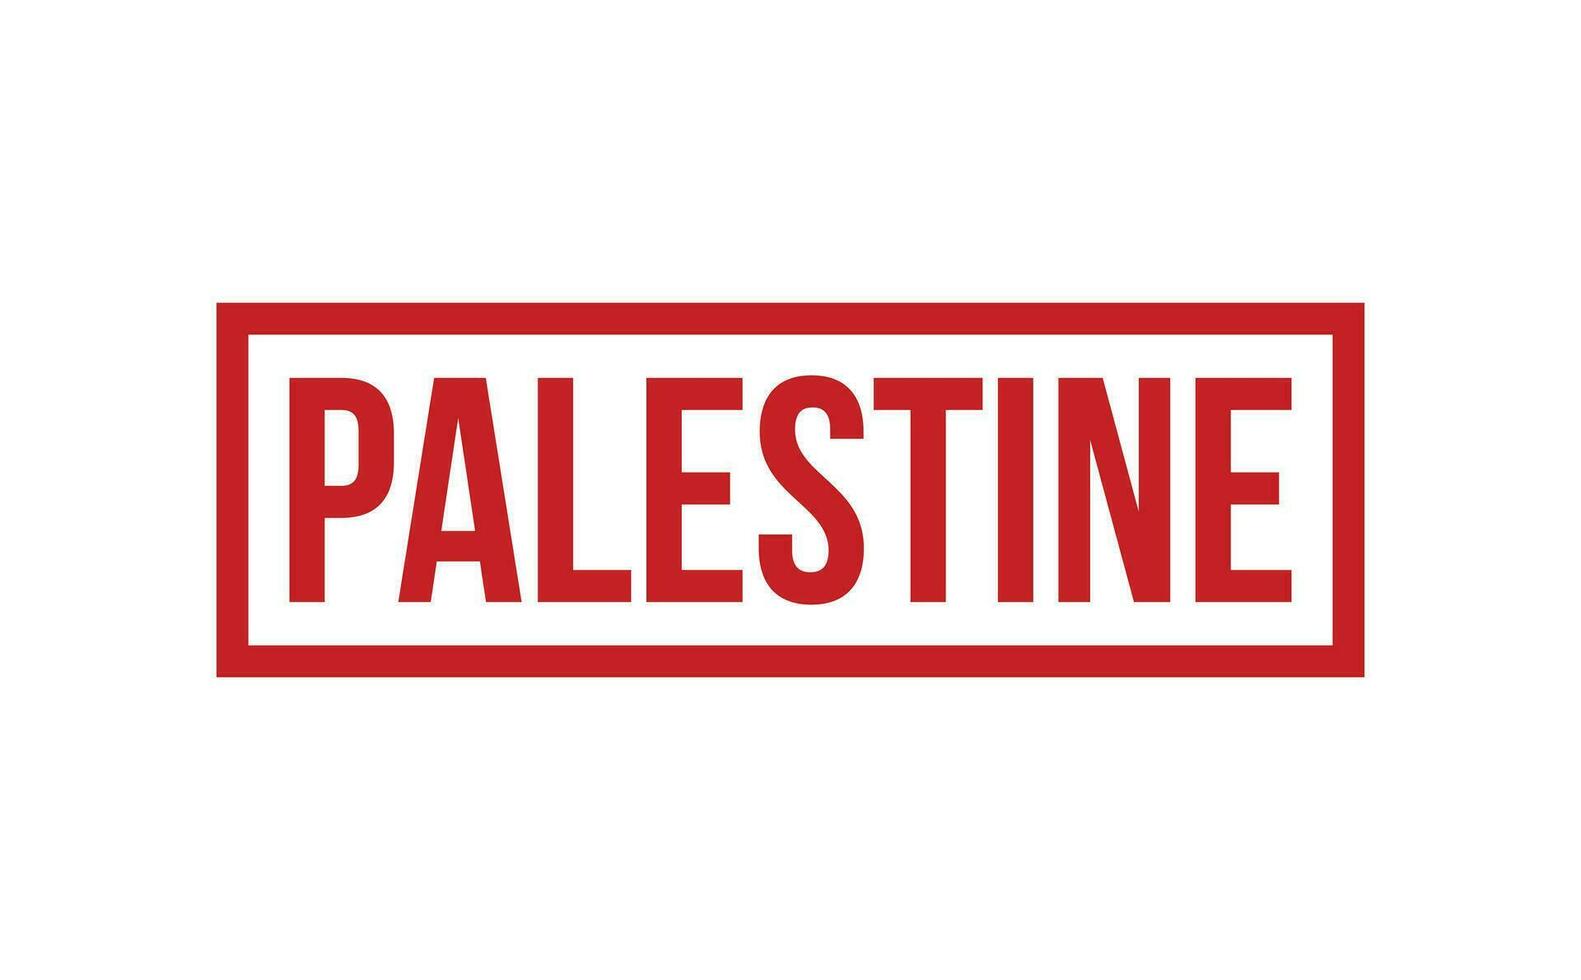 Palestina borracha carimbo foca vetor